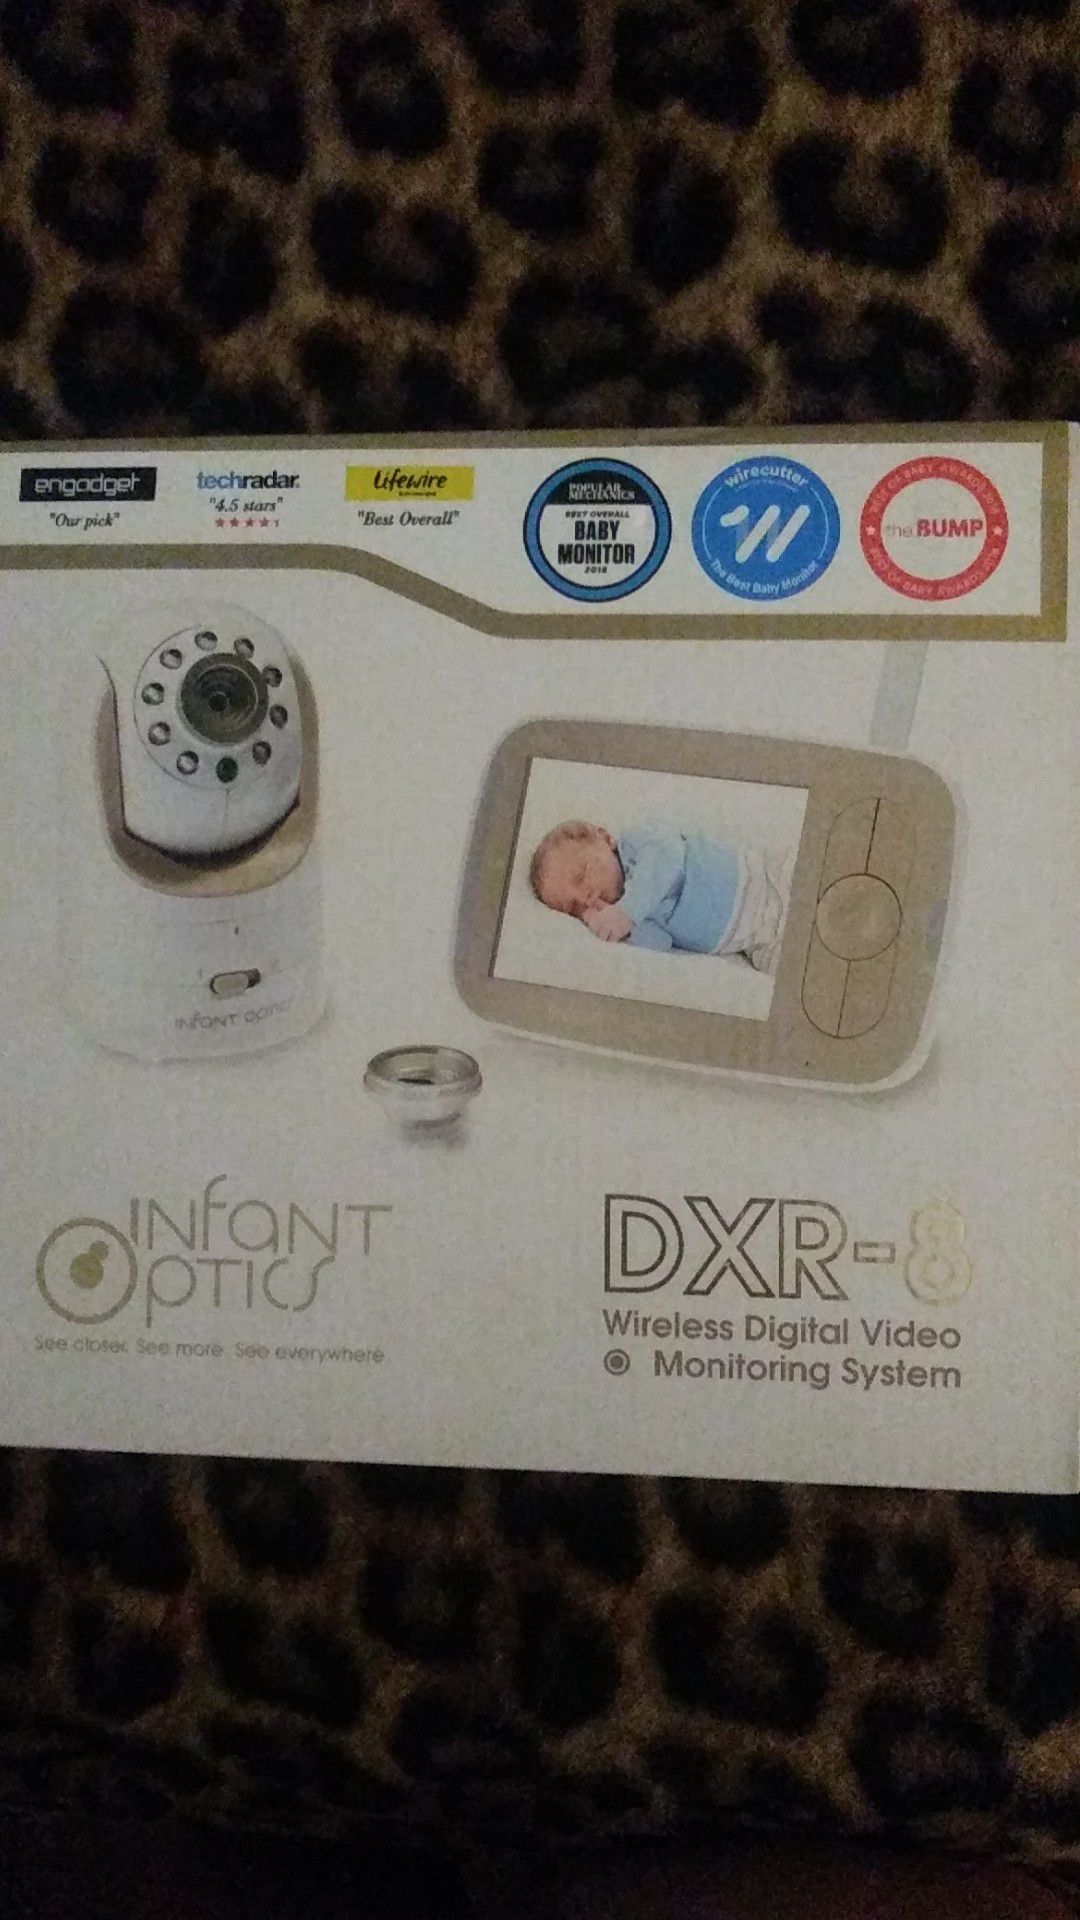 Infant Optics DXR8 wireless digital video monitoring system